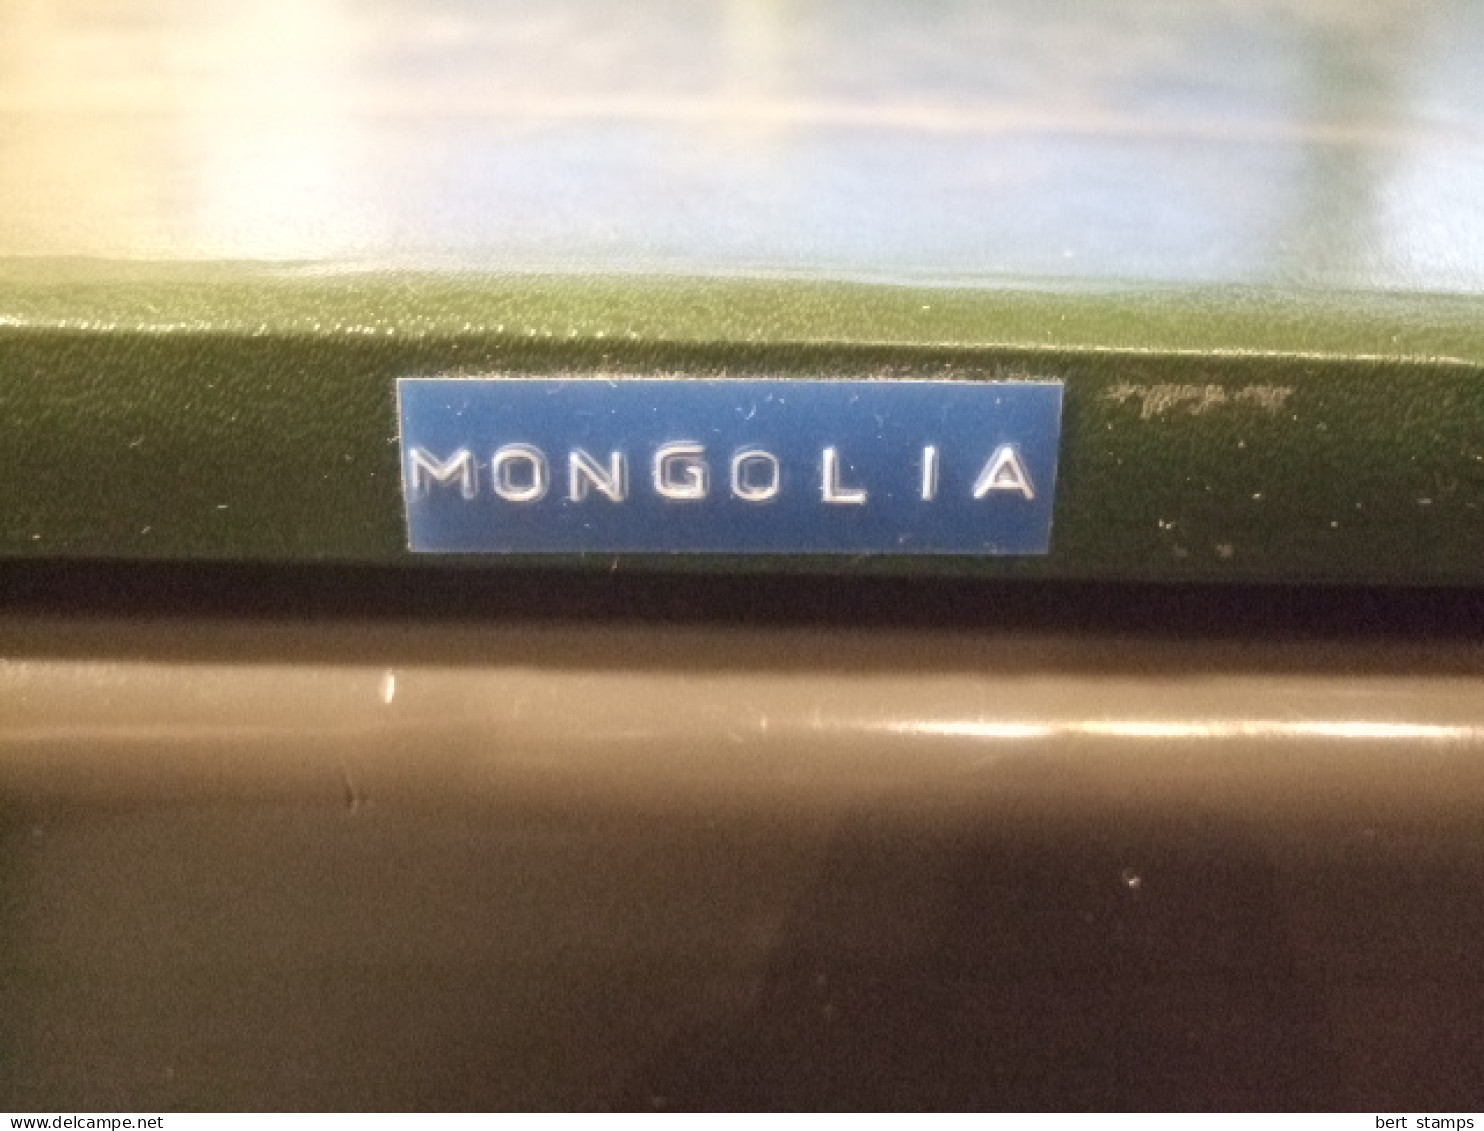 Mongolie In Stockbook - Mongolie